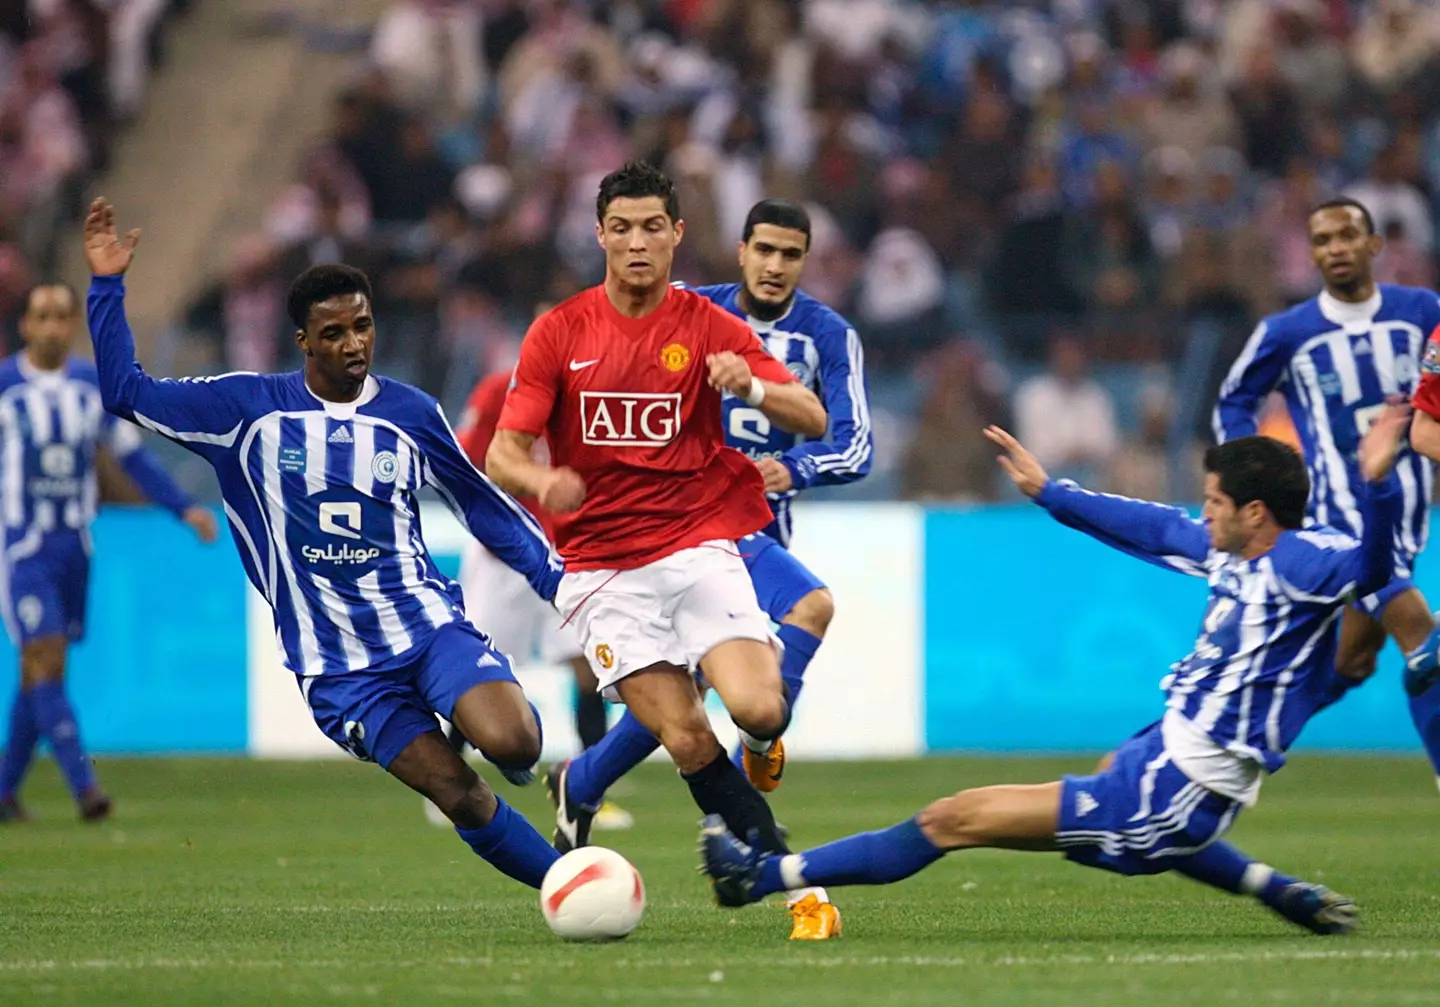 Ronaldo takes on Al Hilal defenders. Image: Alamy